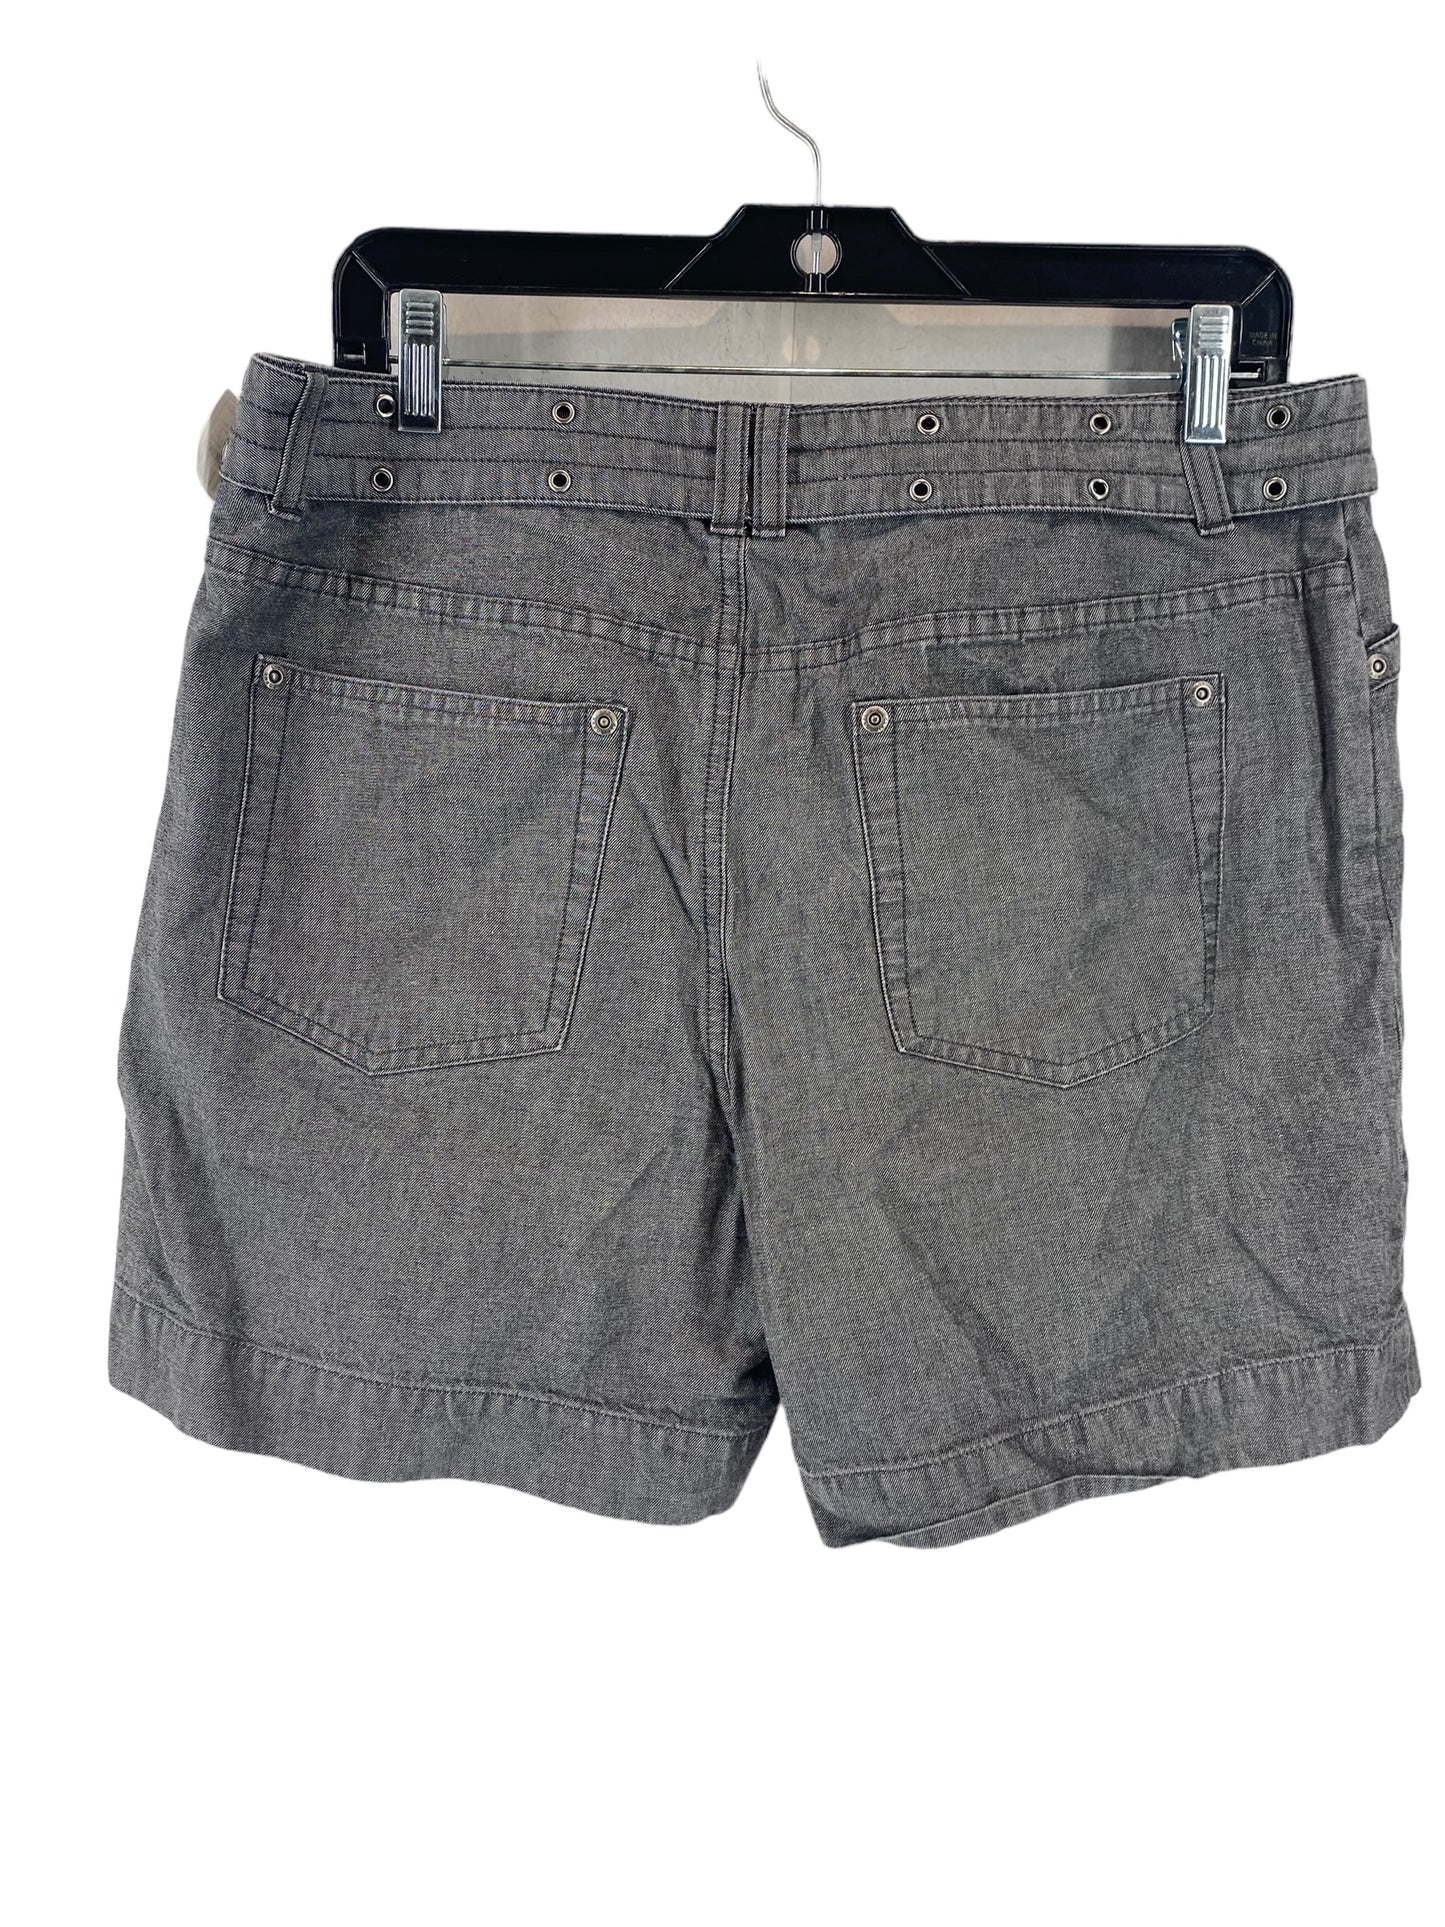 Shorts By Liz Claiborne  Size: 12